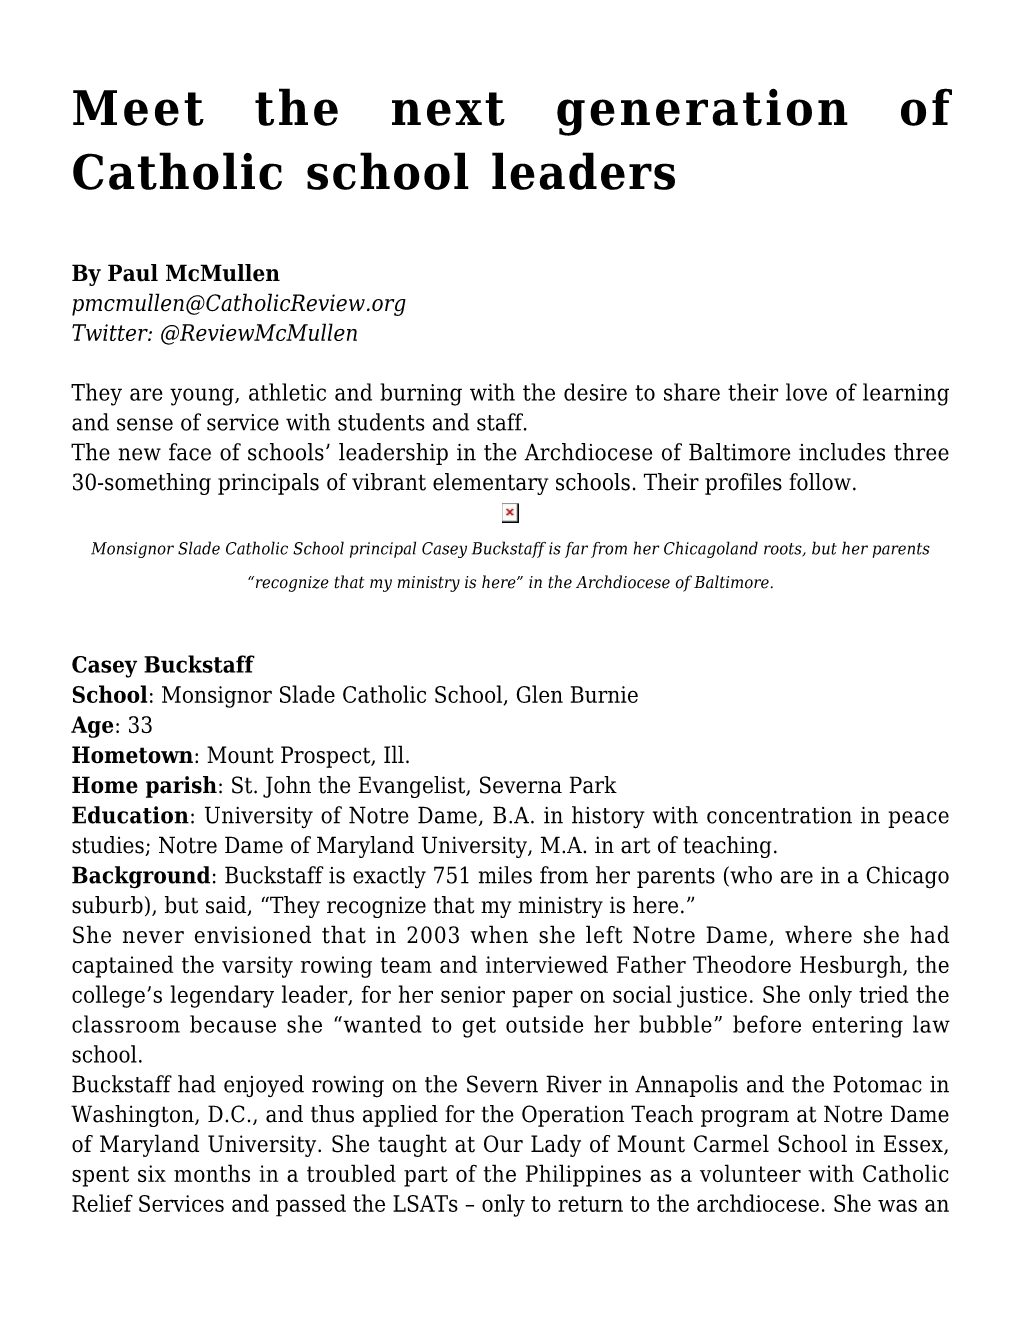 Meet the Next Generation of Catholic School Leaders